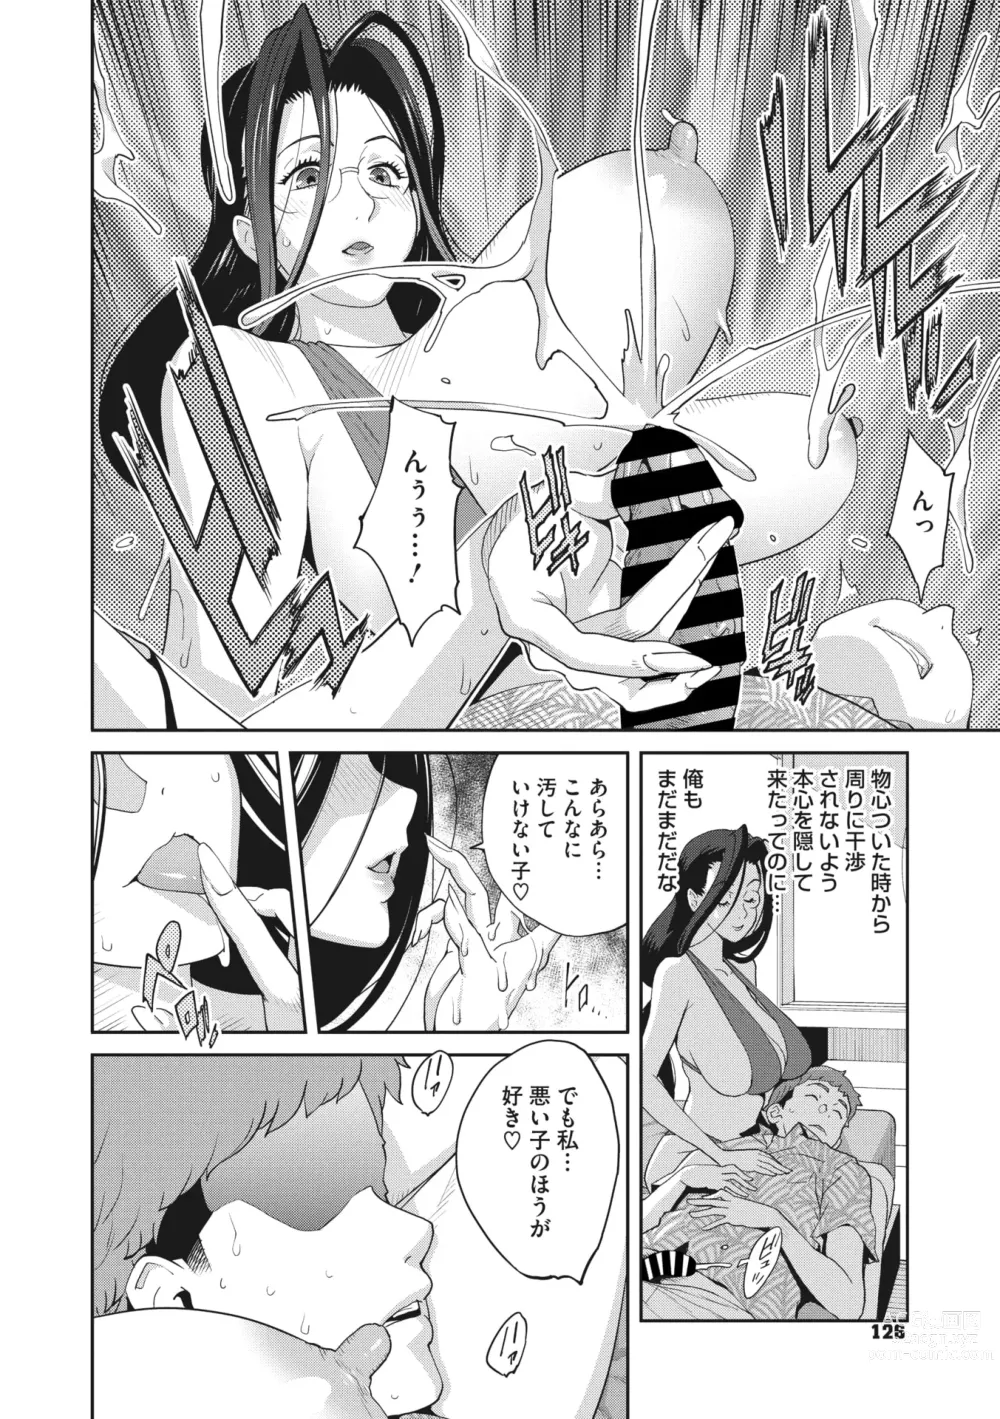 Page 72 of manga Kimama Tawawa Manana 1-4